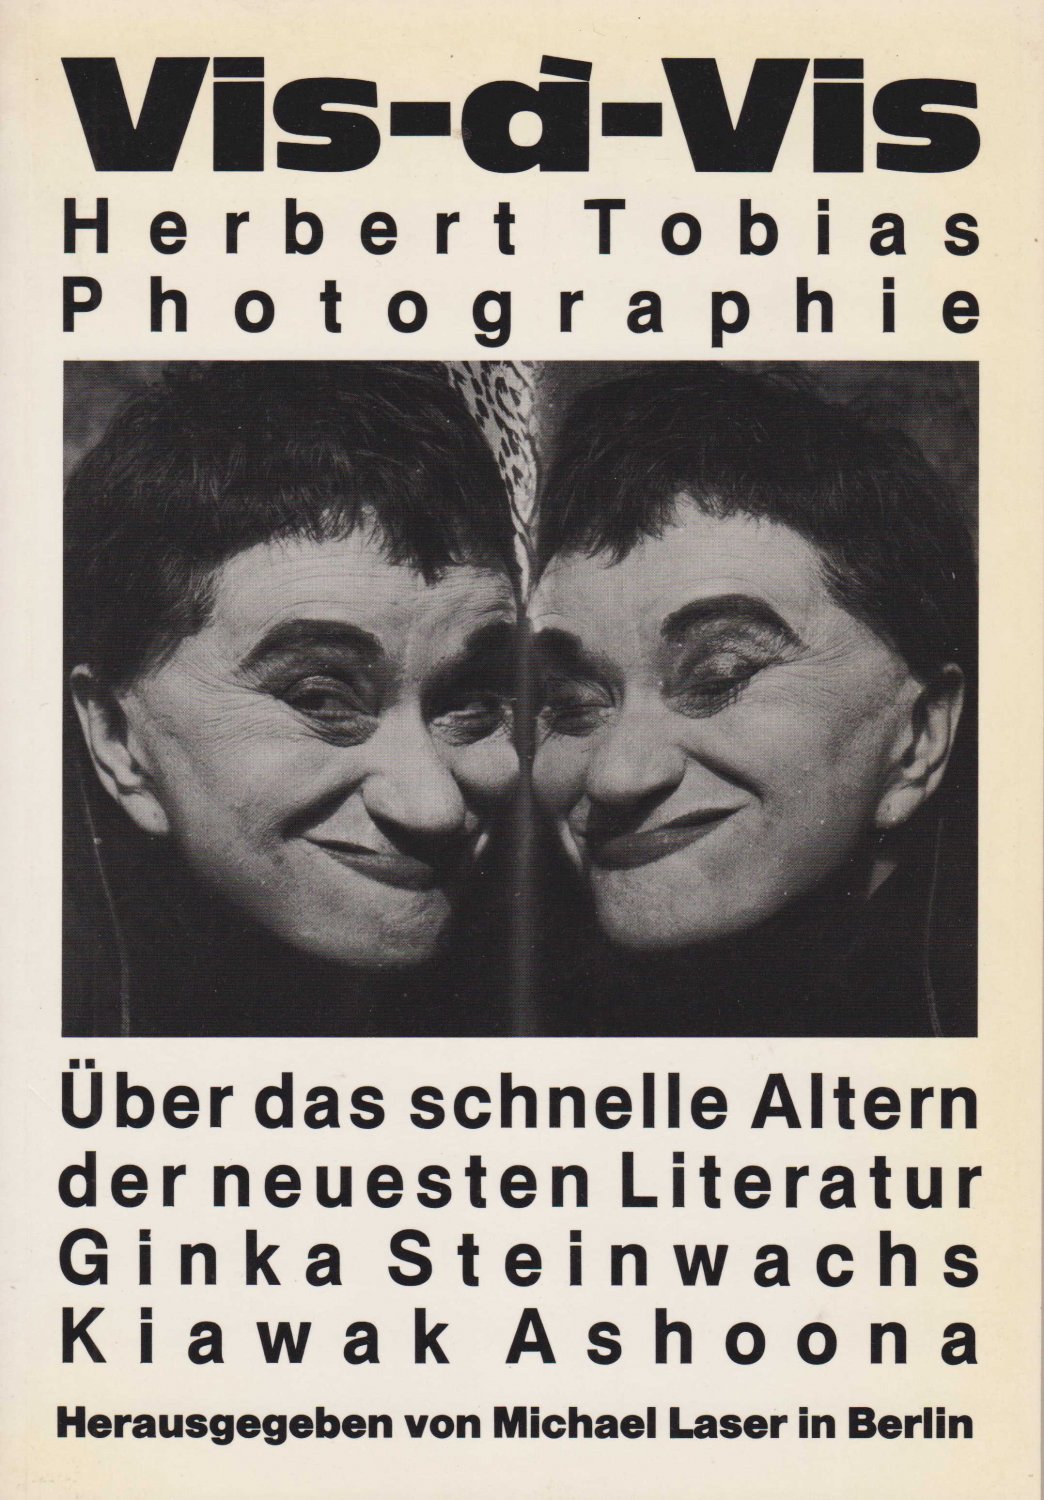 LASER, Michael:  Vis-à-Vis Nr. 18/19, Periodikum für Kultur, ehemals Berliner Literatur- & Kunstmagazin, 4. Jahrgang. Der Photograph Herbert Tobias. 